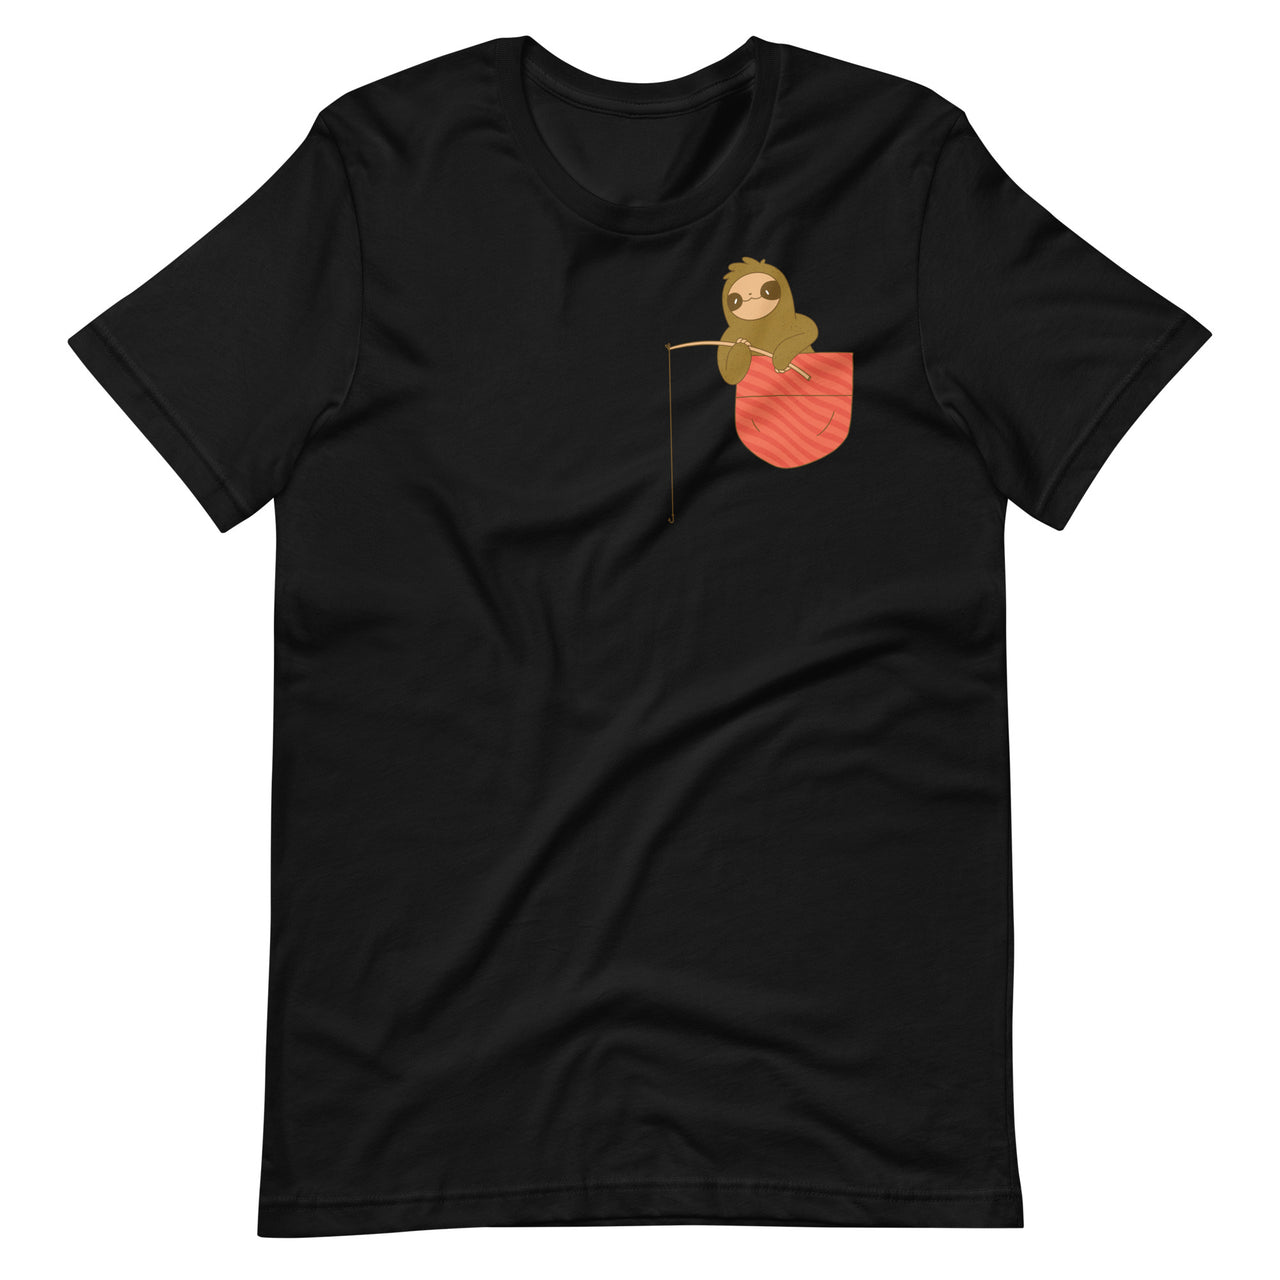 Sloth Fishing in Pocket T-Shirt